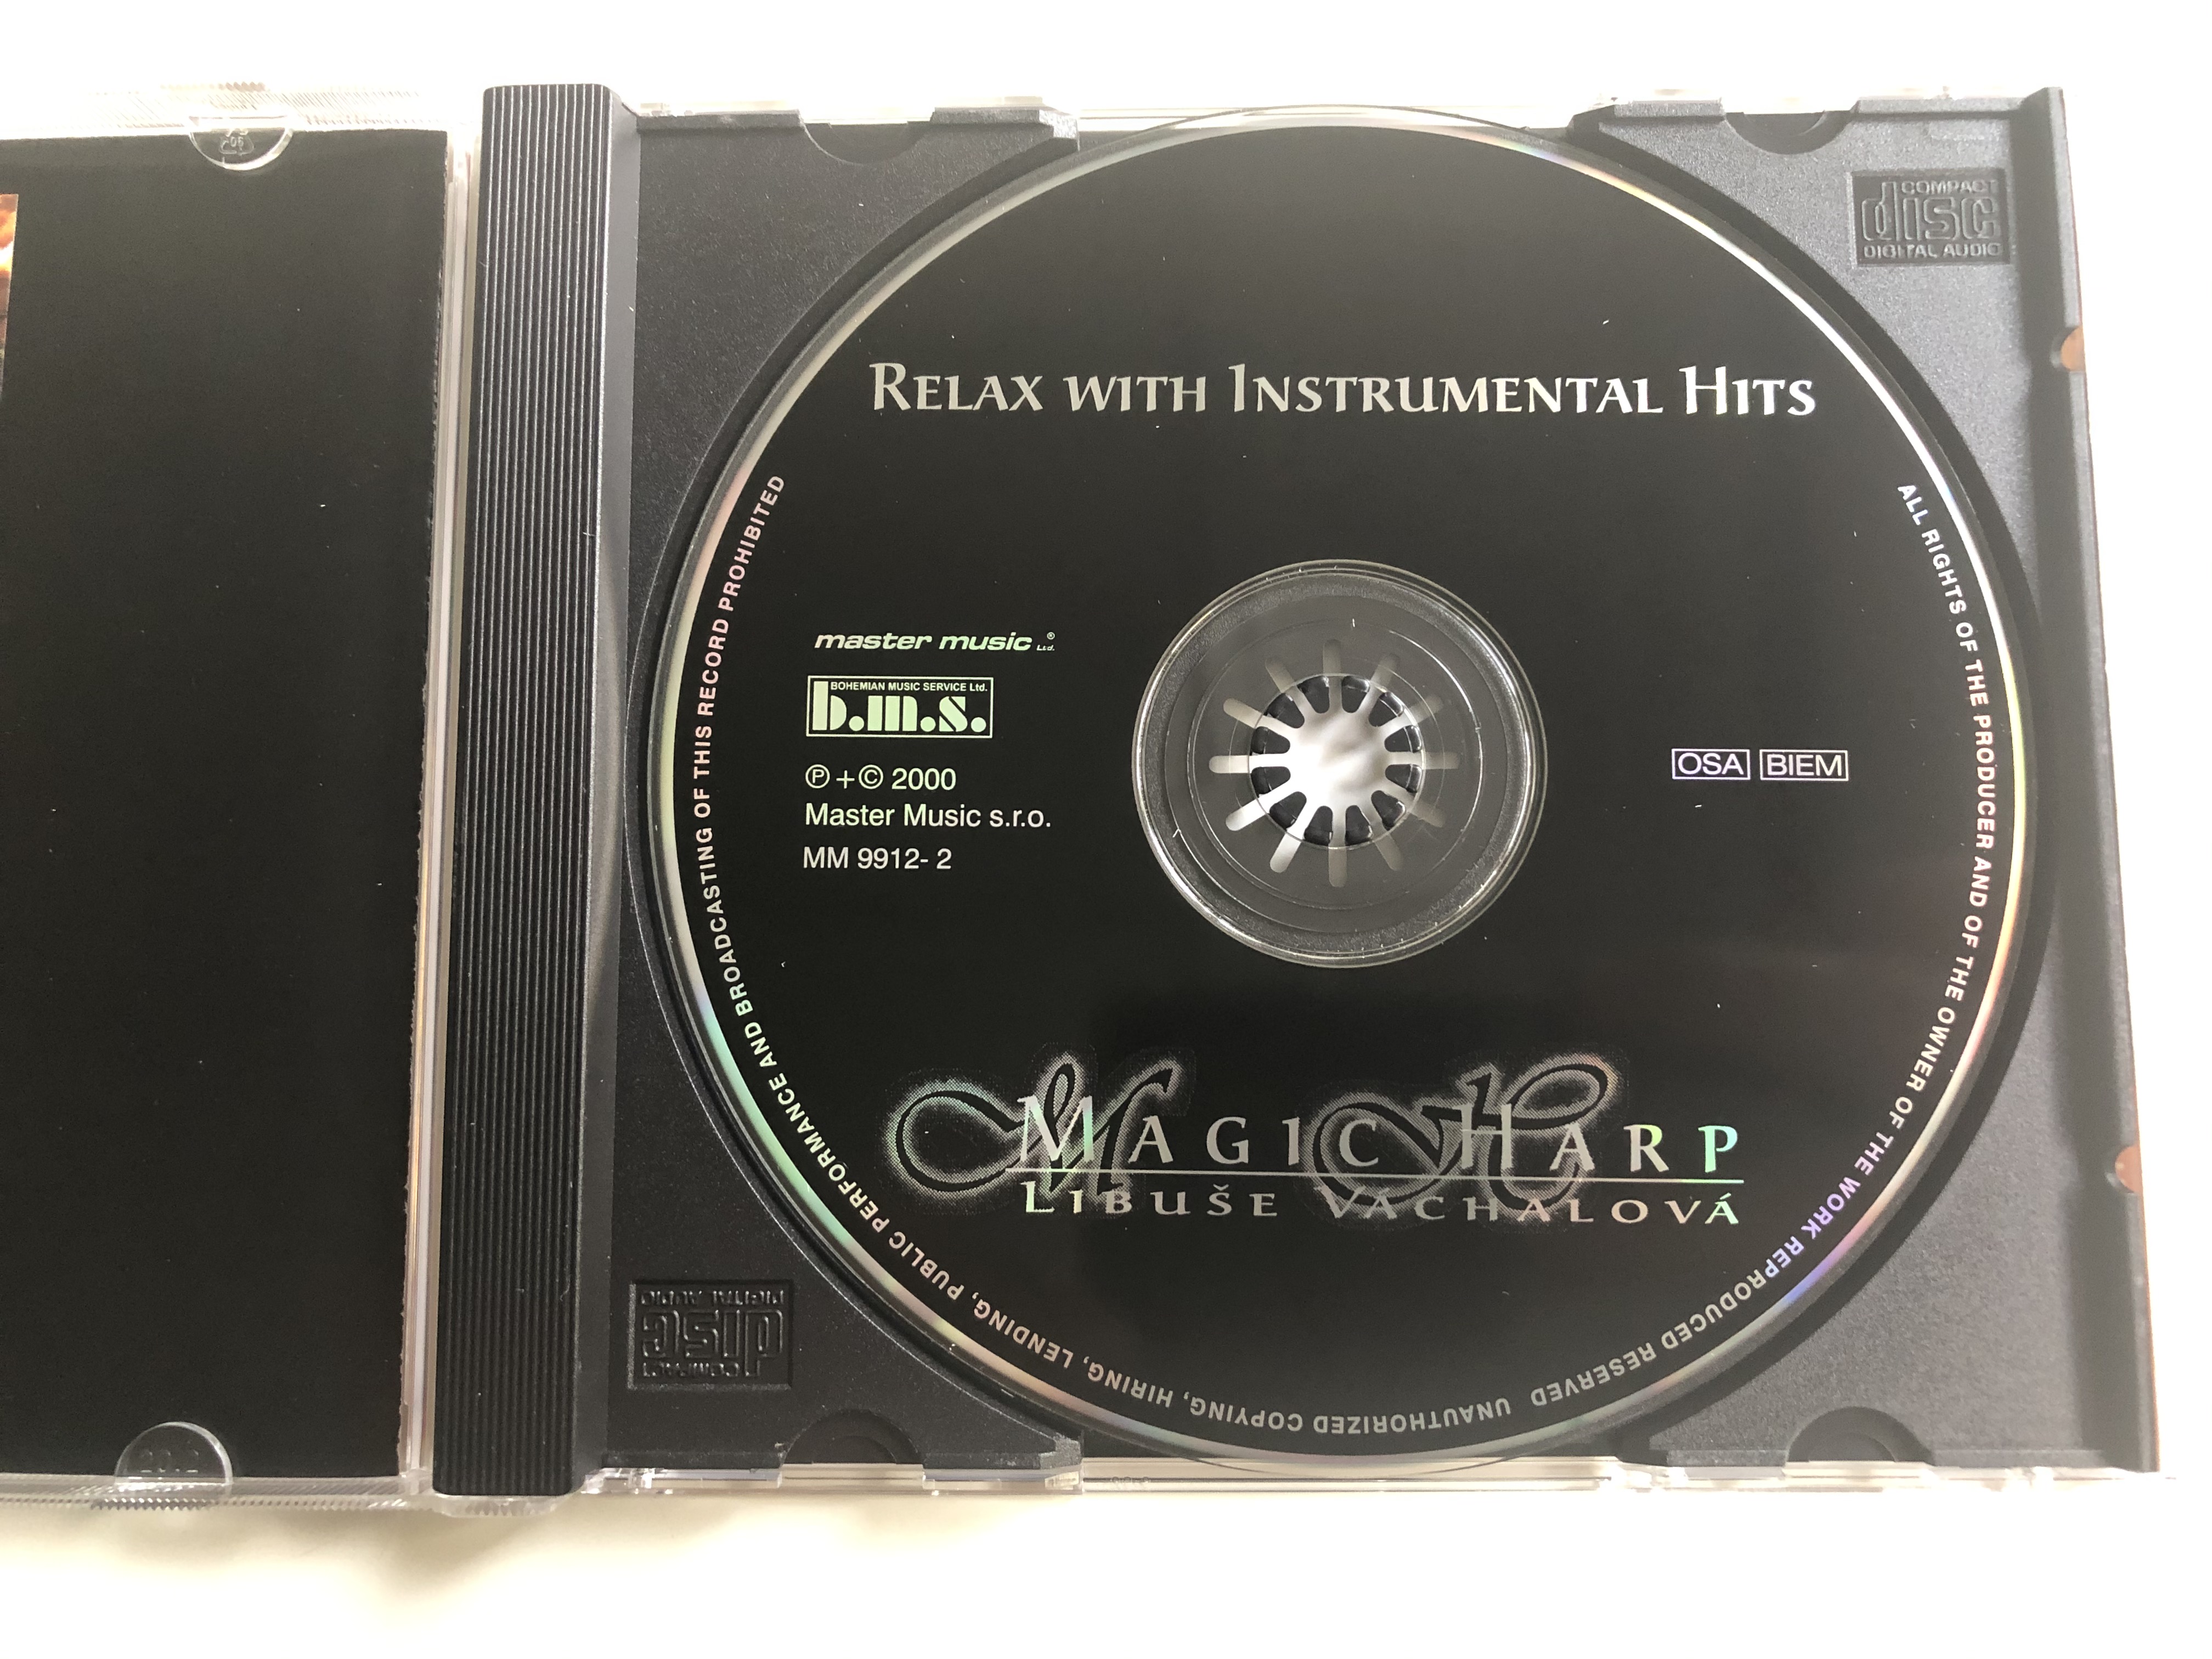 relax-with-instrumental-hits-harp-harfa-libu-e-v-chalov-master-music-audio-cd-2000-mm-9912-2-6-.jpg